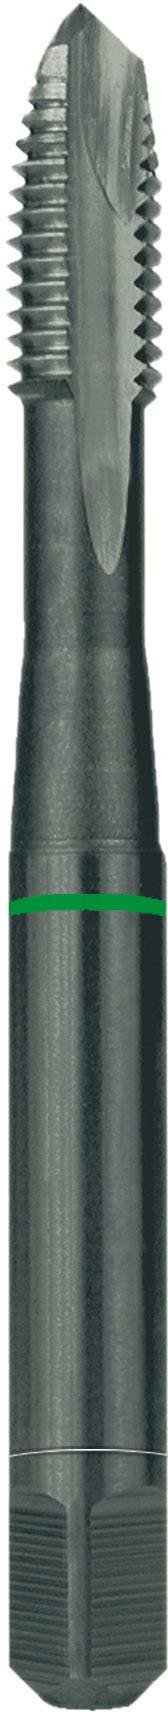 RUKO Maschinengewindebohrer DIN371 B M8x1,25mm HSS 6H RUKO (232080)